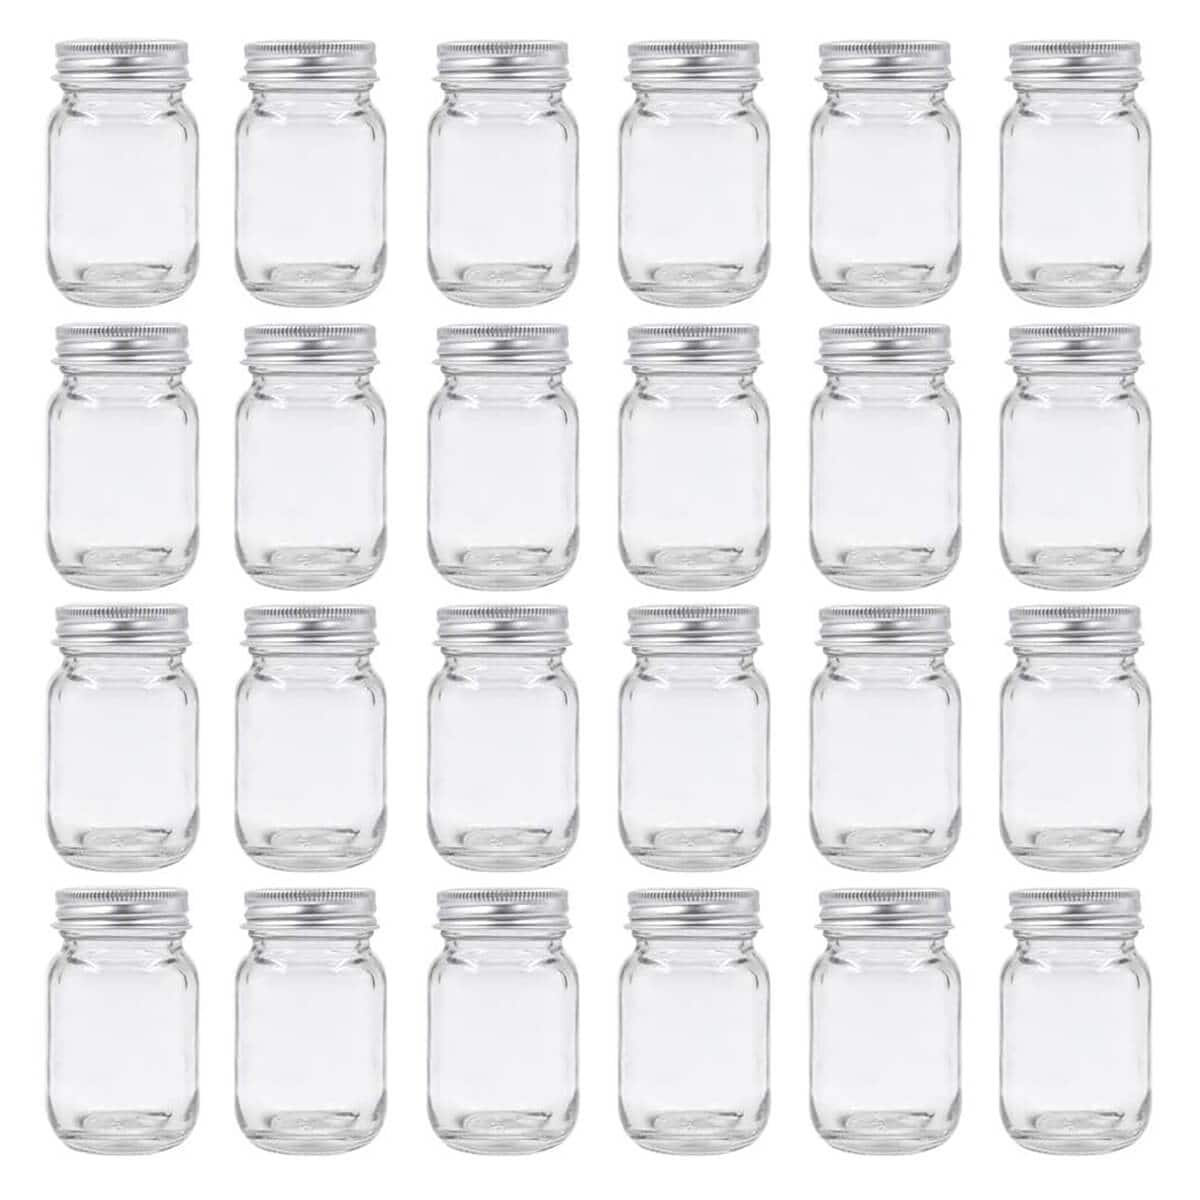 2 oz mason jars with silver lids.